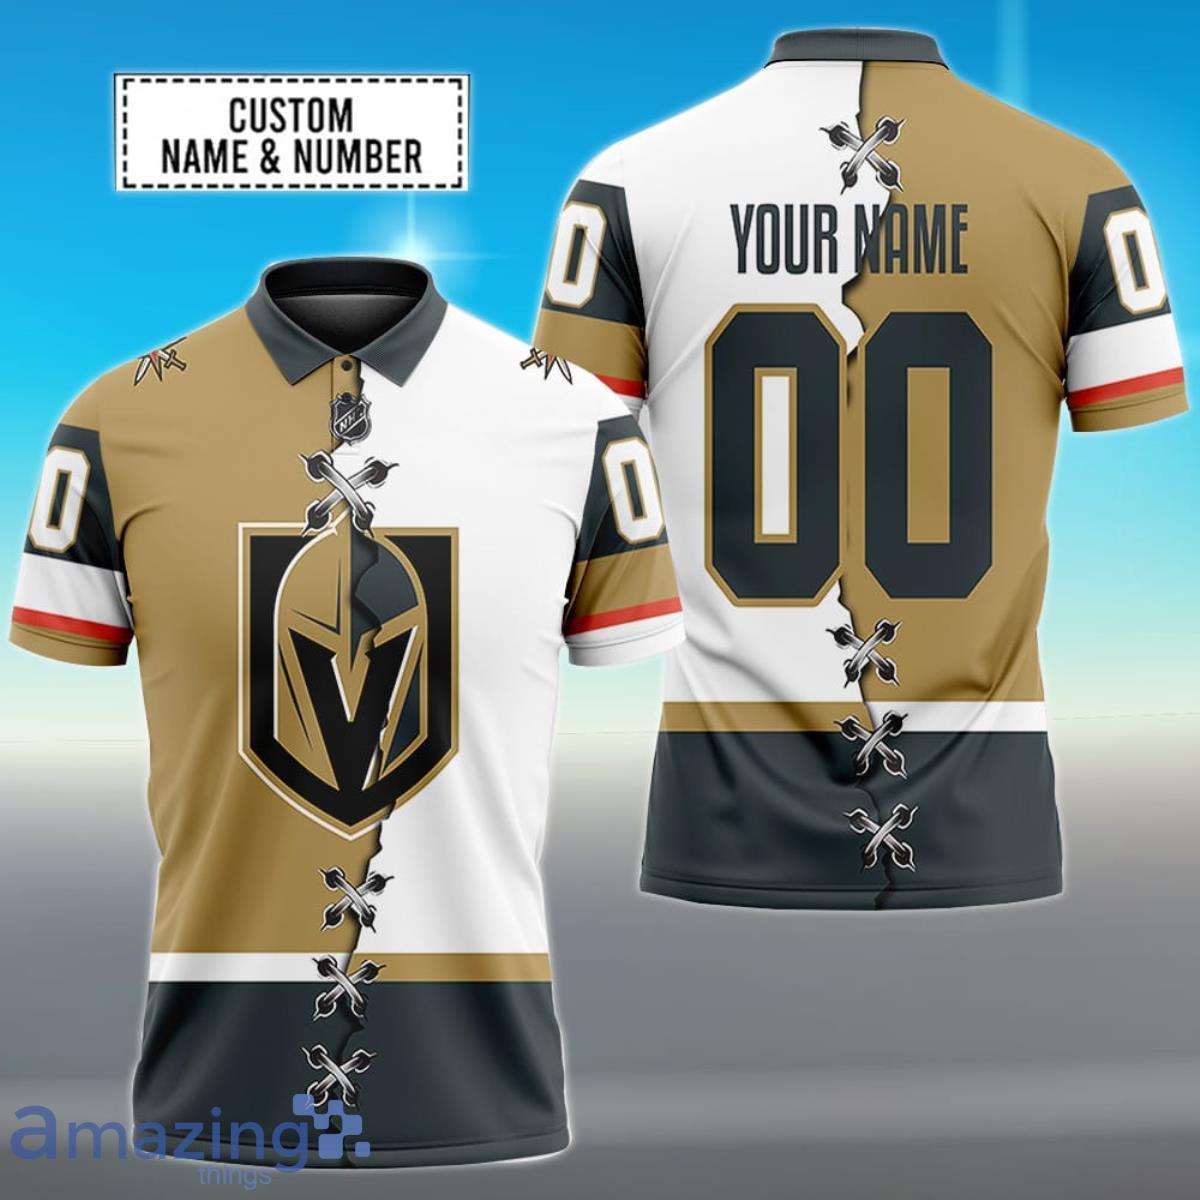 NHL 18 - How To? - Creating My Custom Vegas Golden Knights 